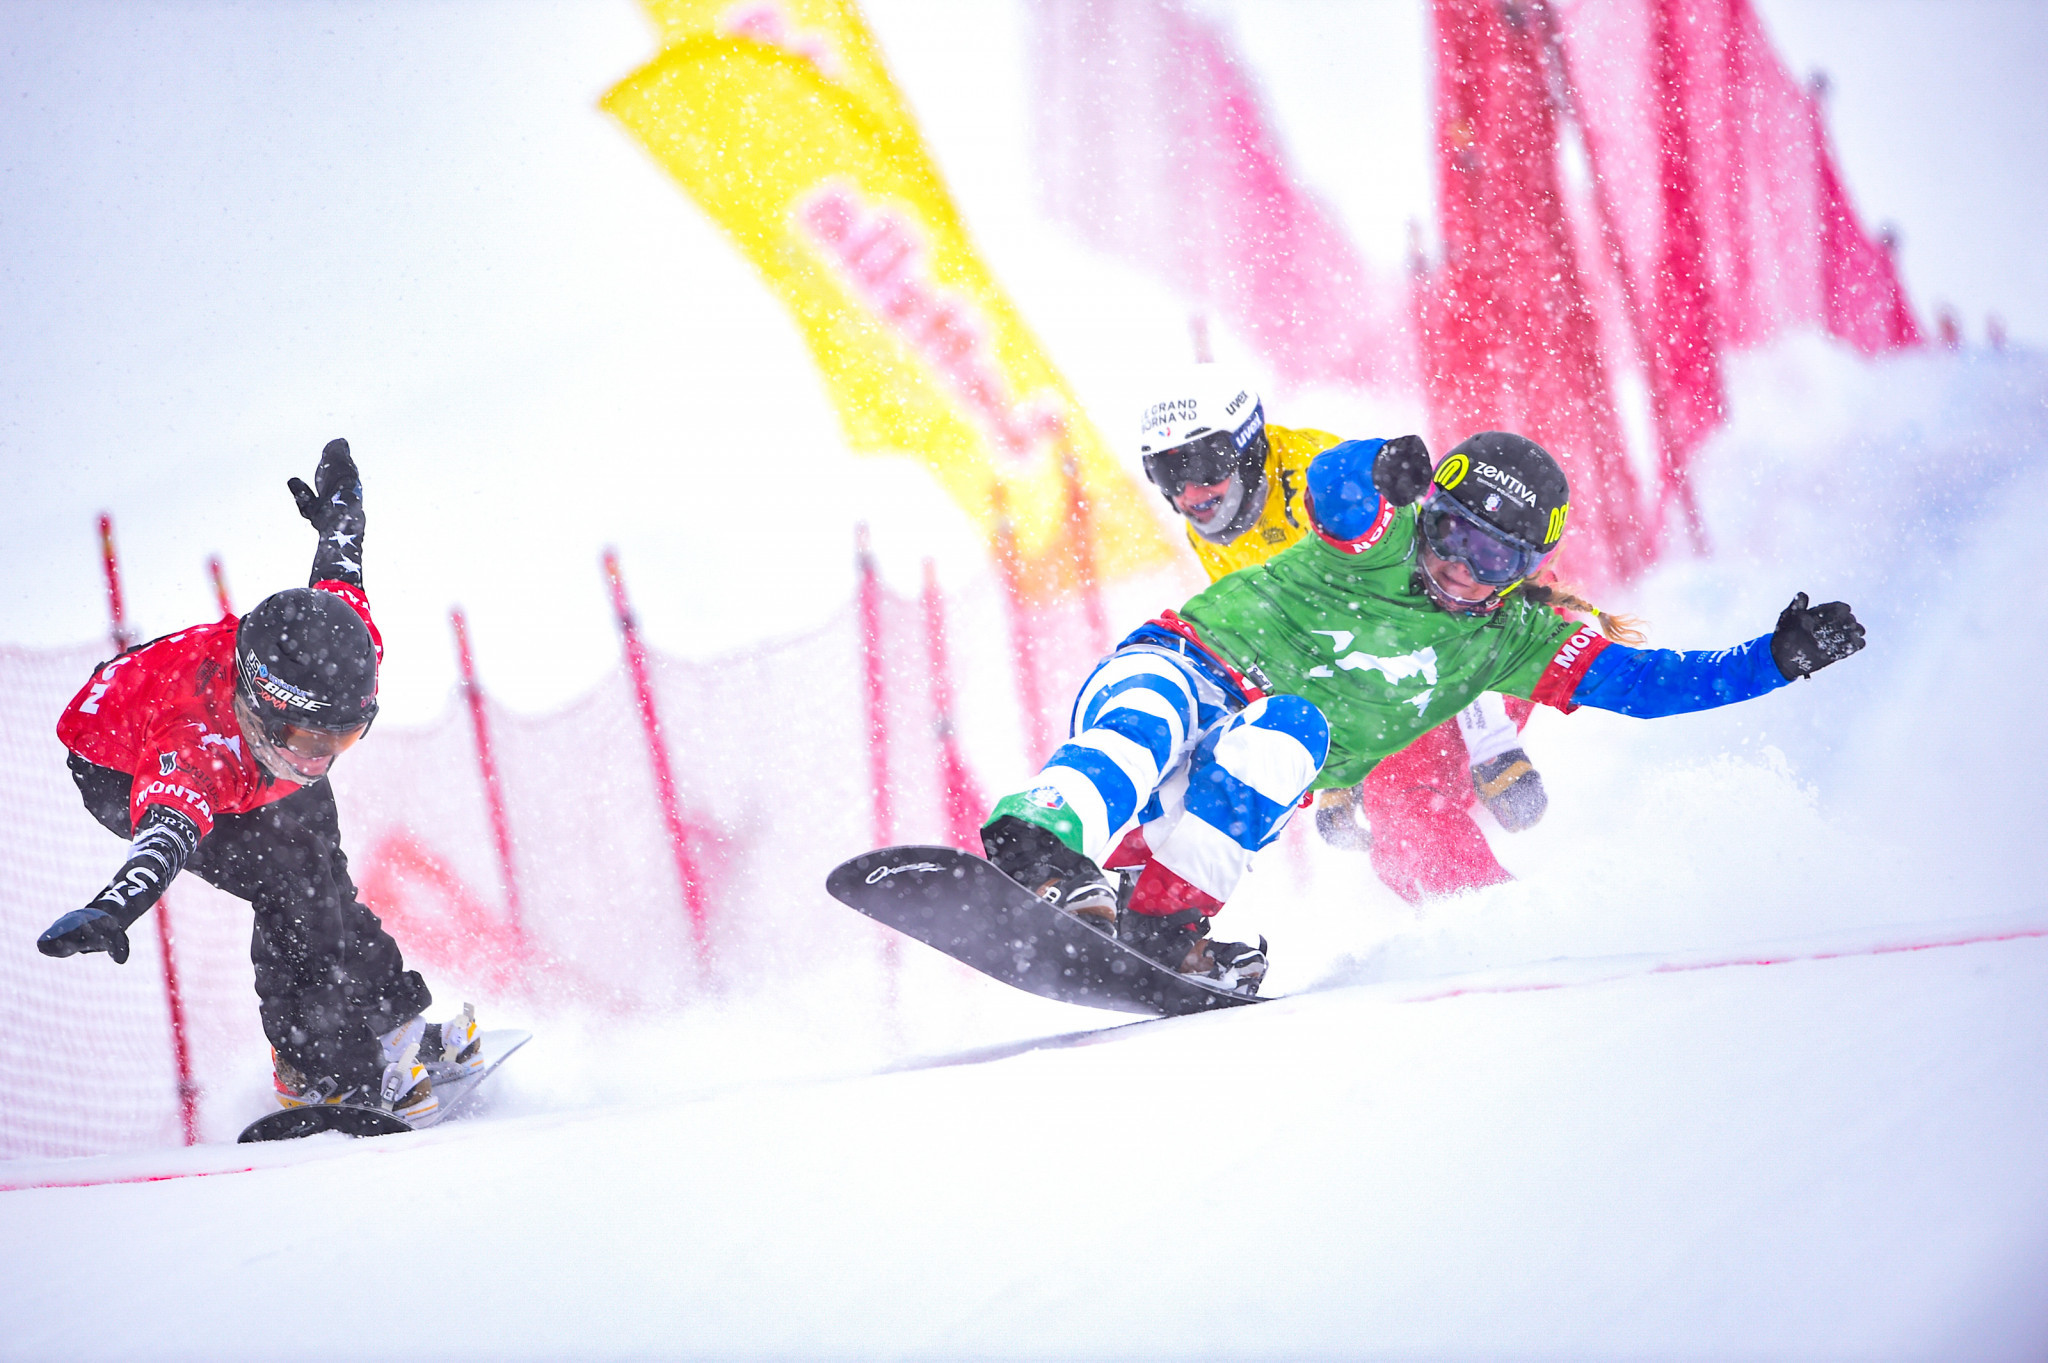 Moioli and Vaultier earn FIS Snowboard Cross World Cup wins at Feldberg ahead of Pyeongchang 2018 test